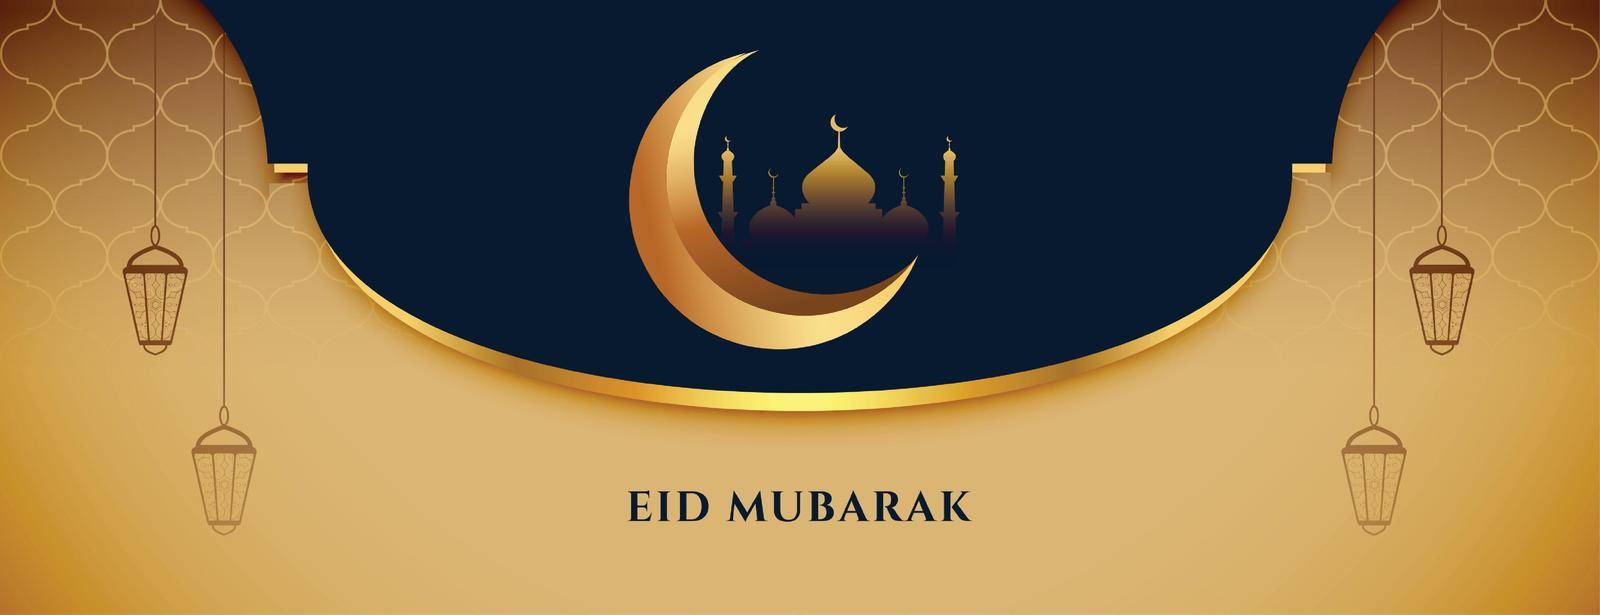 realistic eid mubarak festival banner with moon and islamic decoration